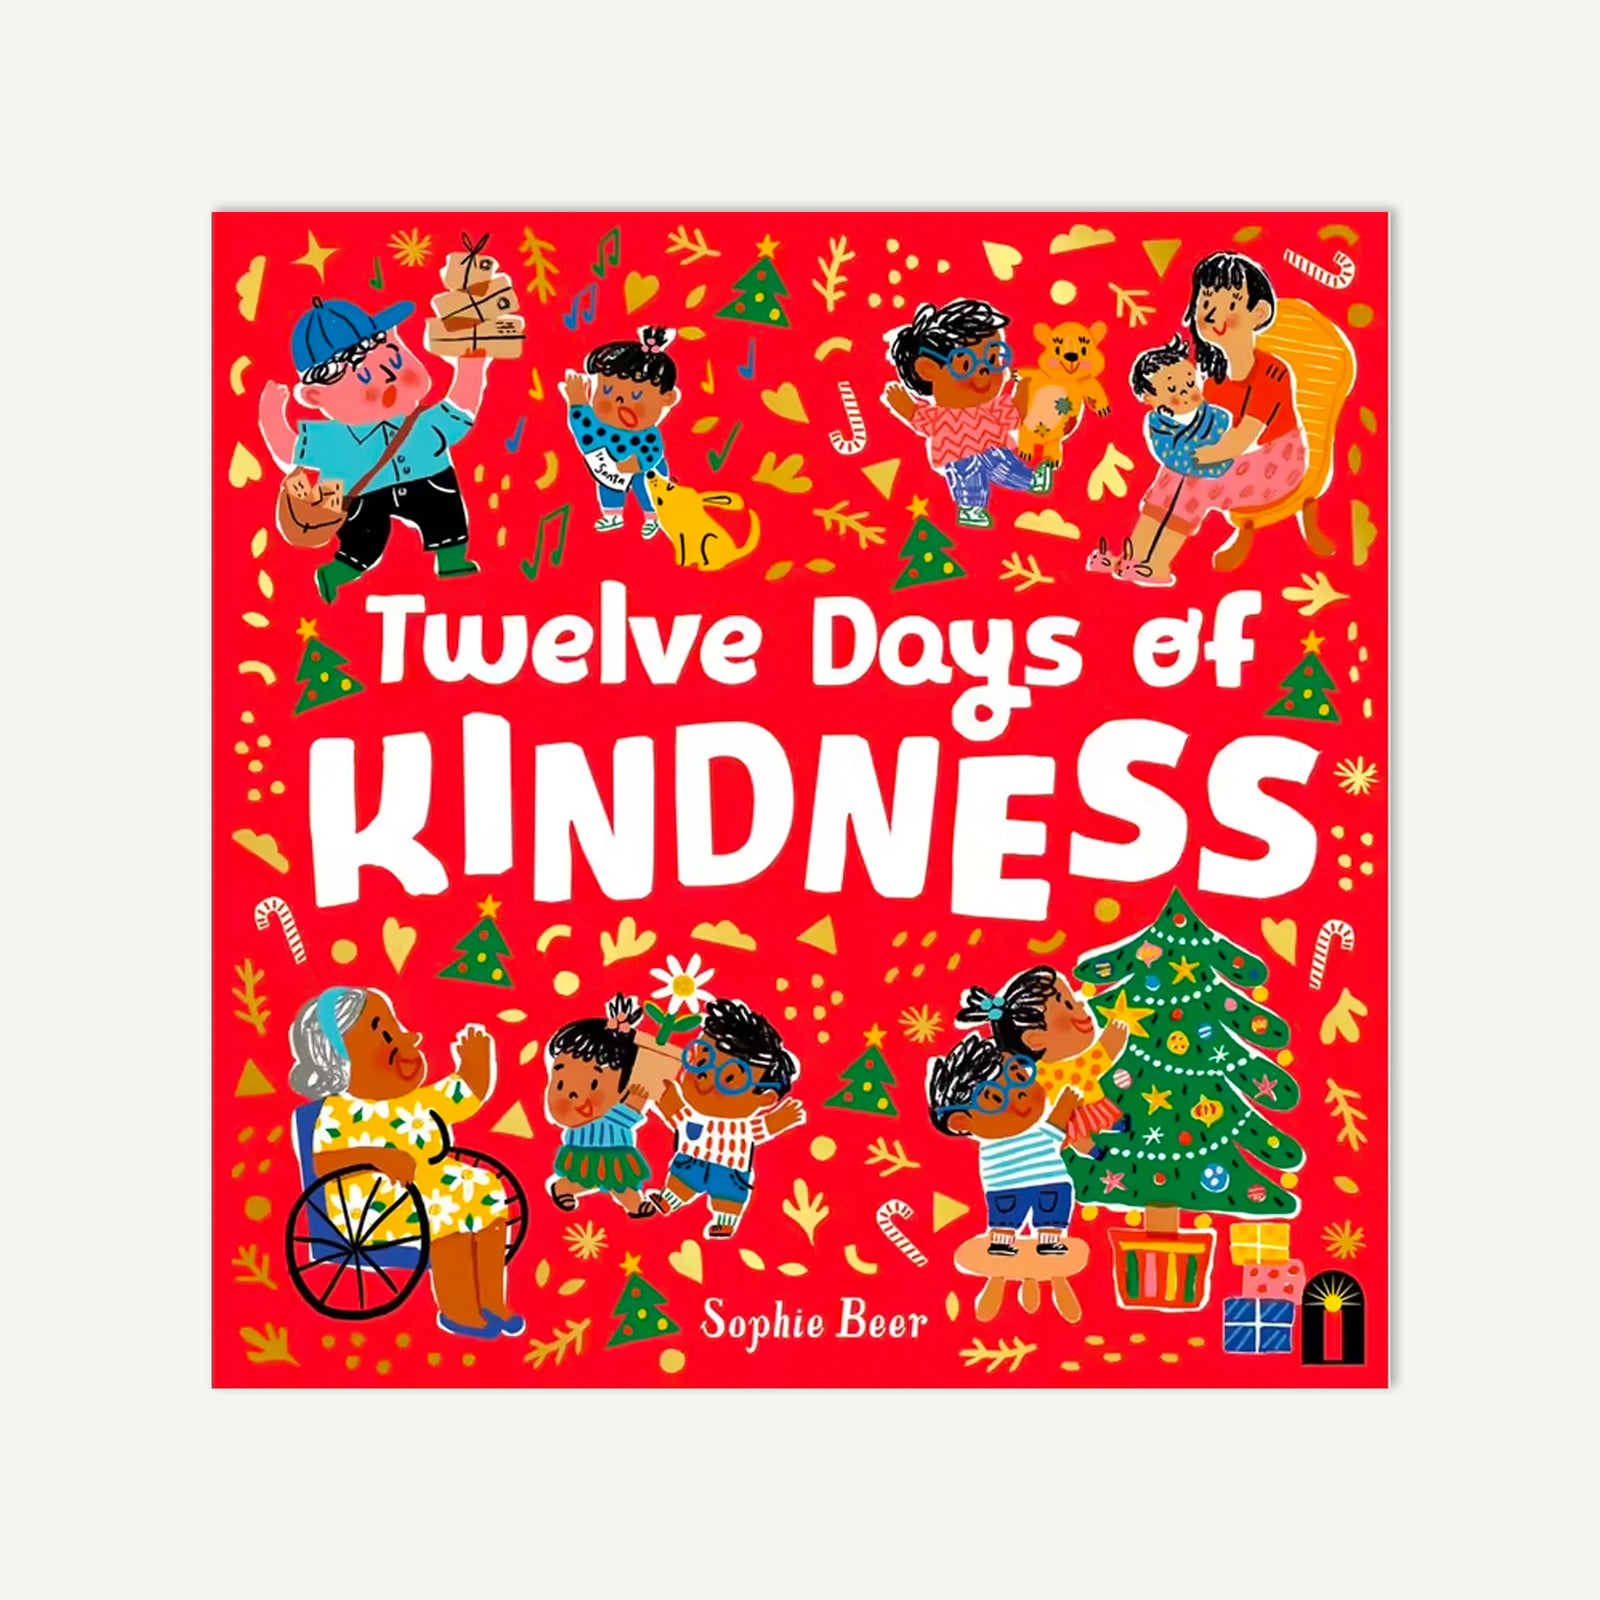 The Twelve Days of Kindness